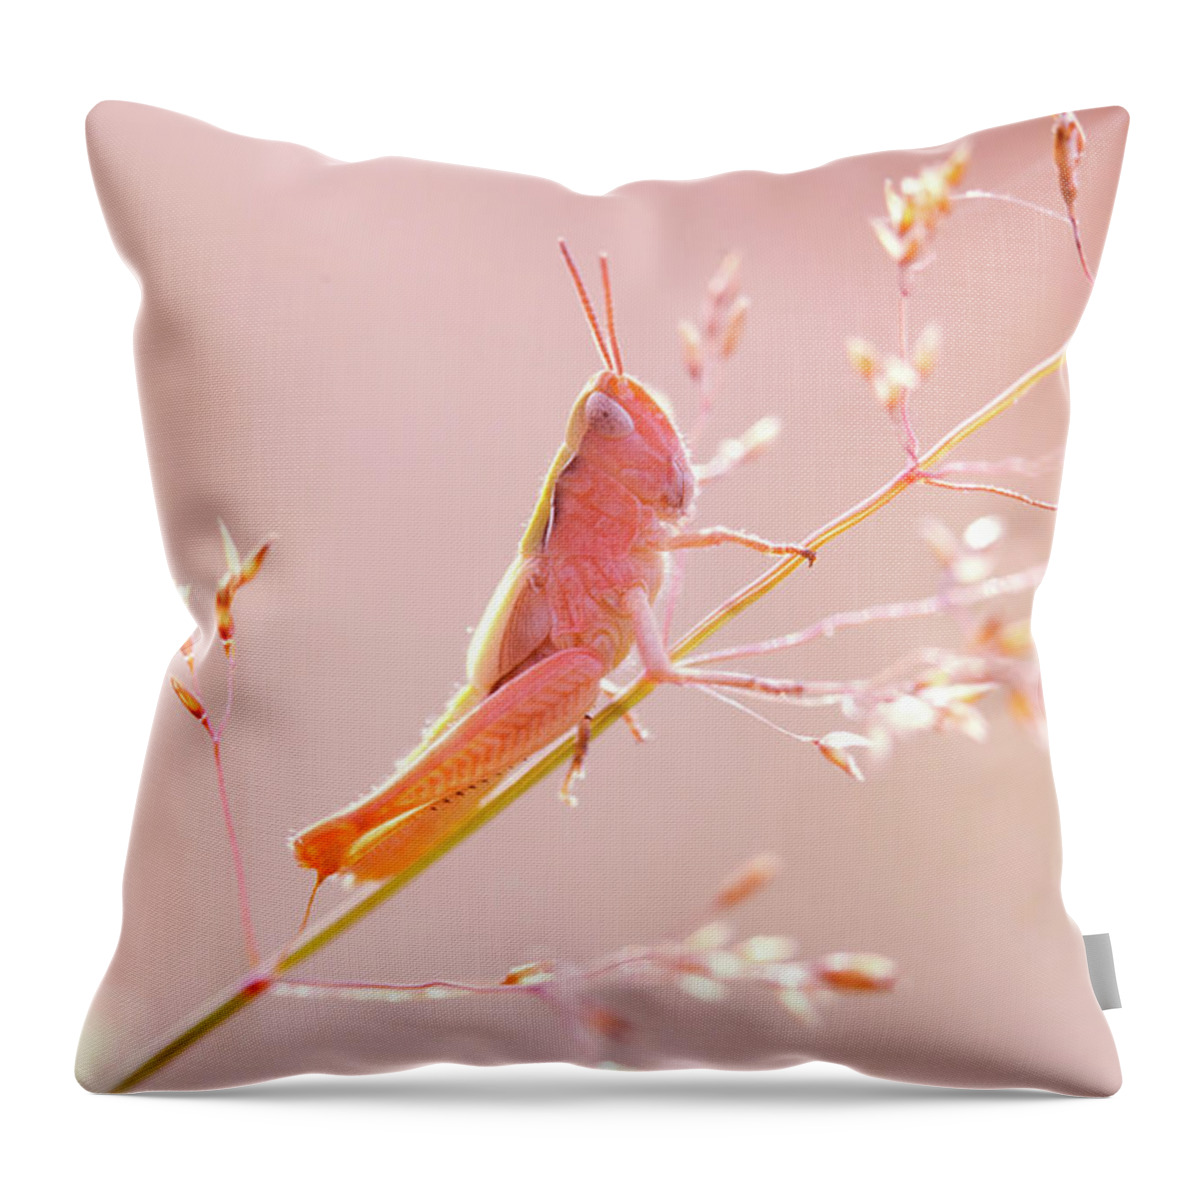 Pink Grasshopper Throw Pillow featuring the photograph Mr Pink - Pink Grassshopper by Roeselien Raimond